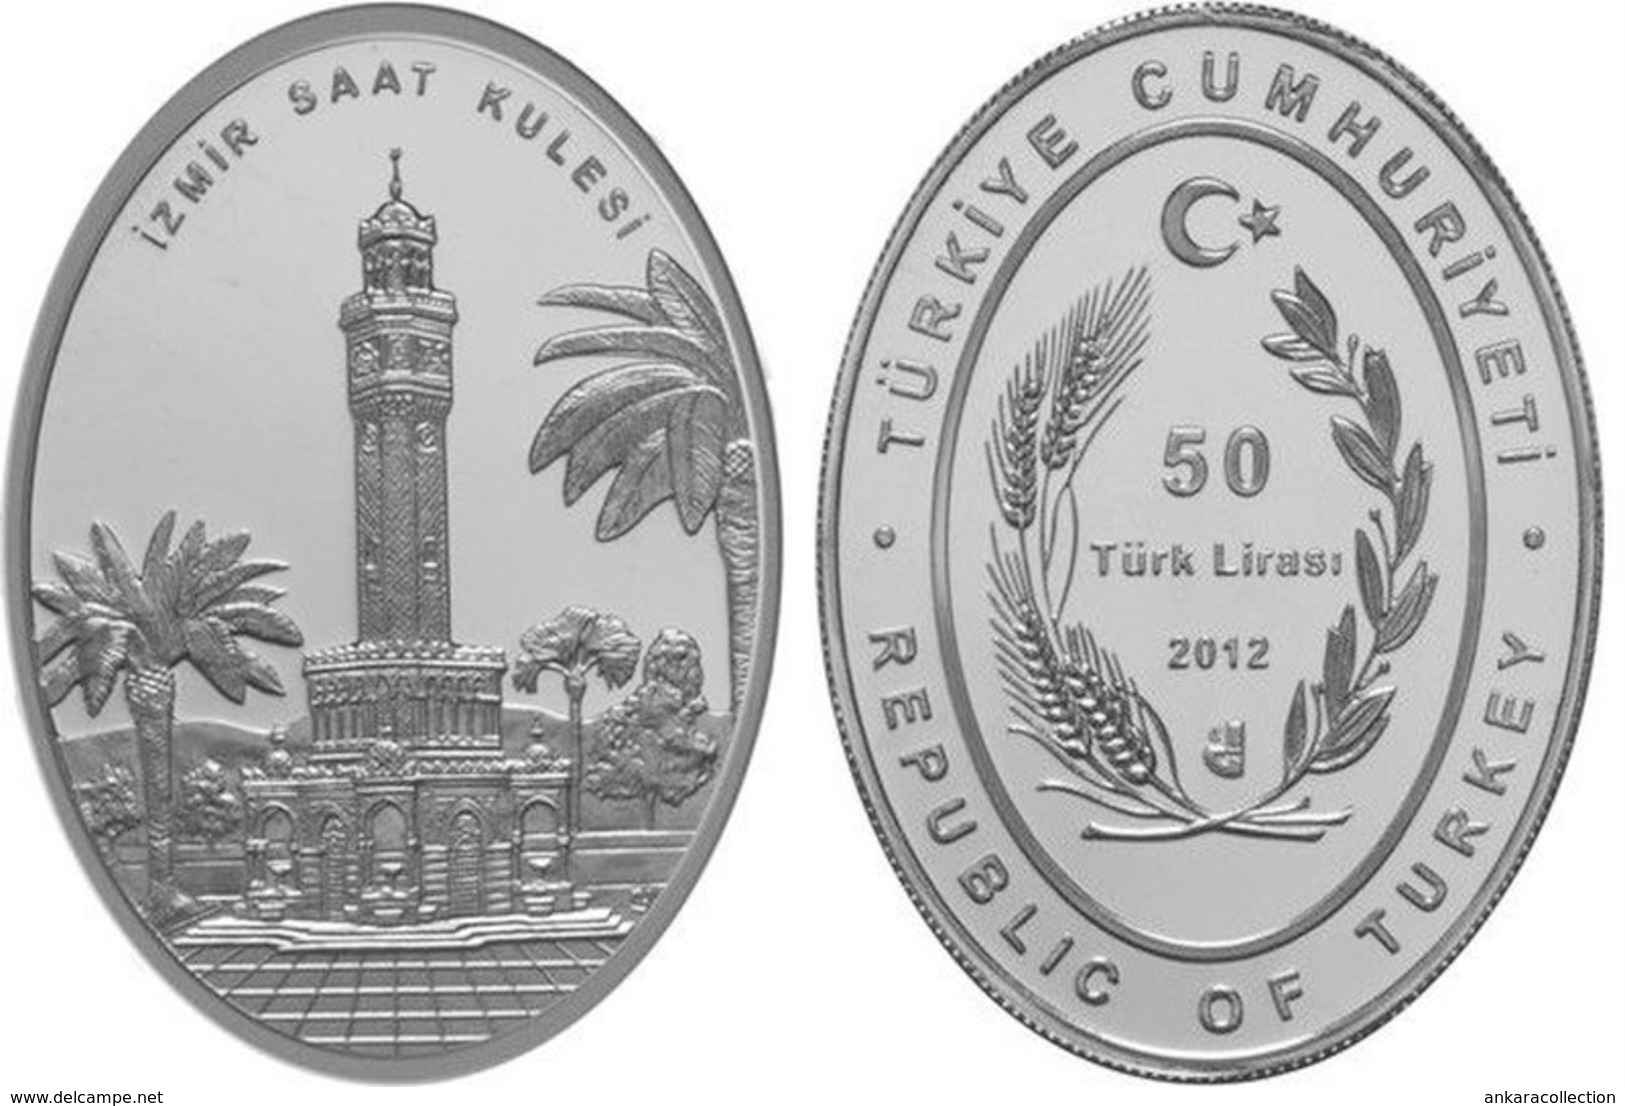 AC - IZMIR CLOCK TOWER CLOCK TOWER SERIES # 3 COMMEMORATIVE SILVER COIN TURKEY 2012 PROOF UNCIRCULATED - Non Classés